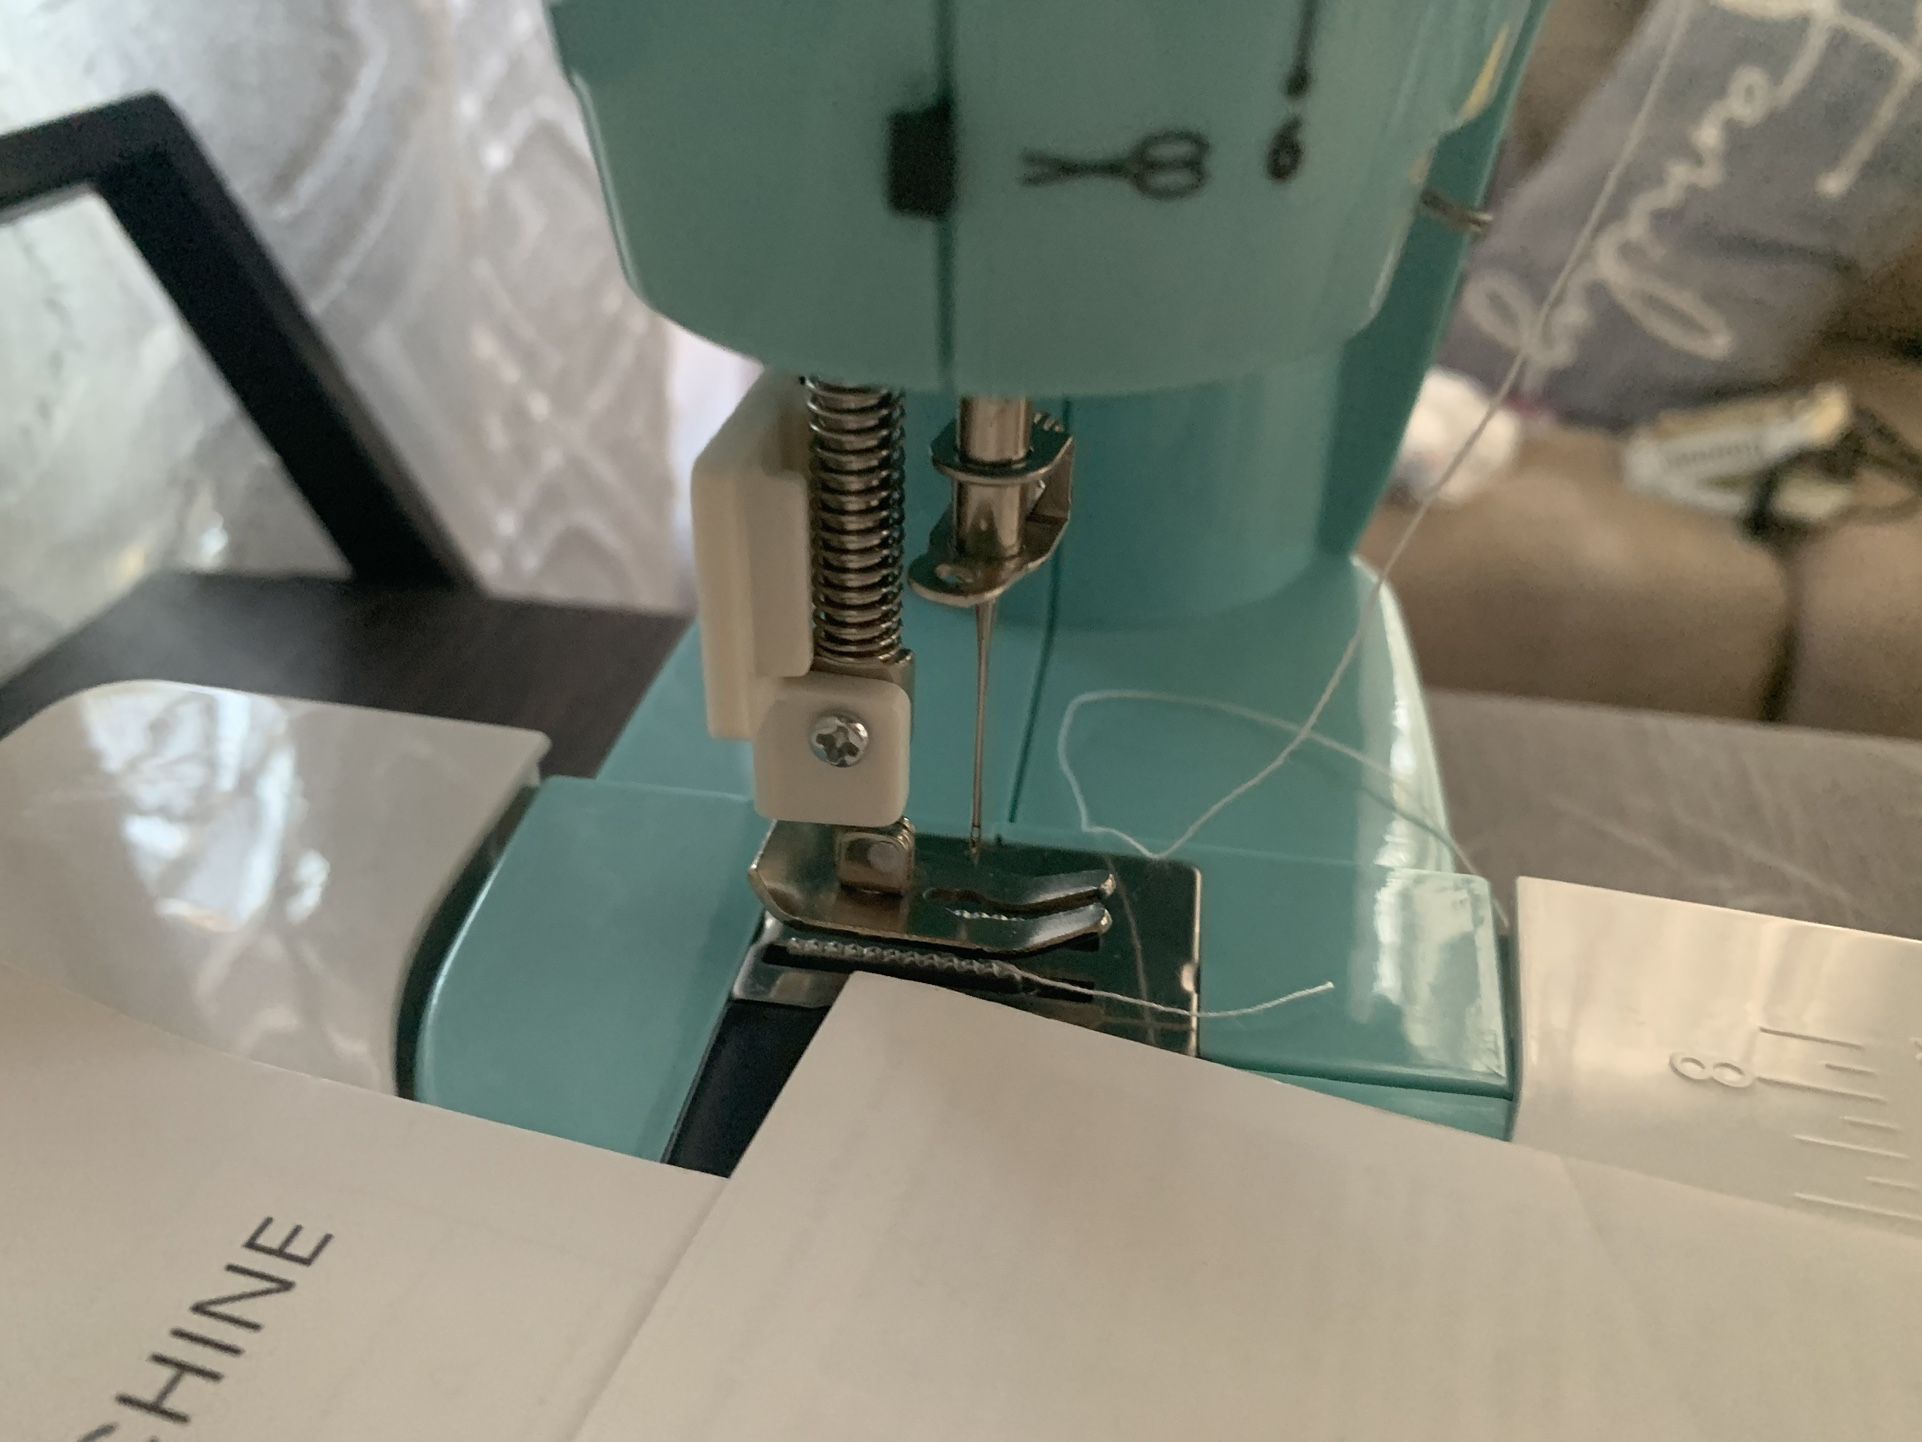 MagicFly Mini Sewing Machine for Sale in Sacramento, CA - OfferUp